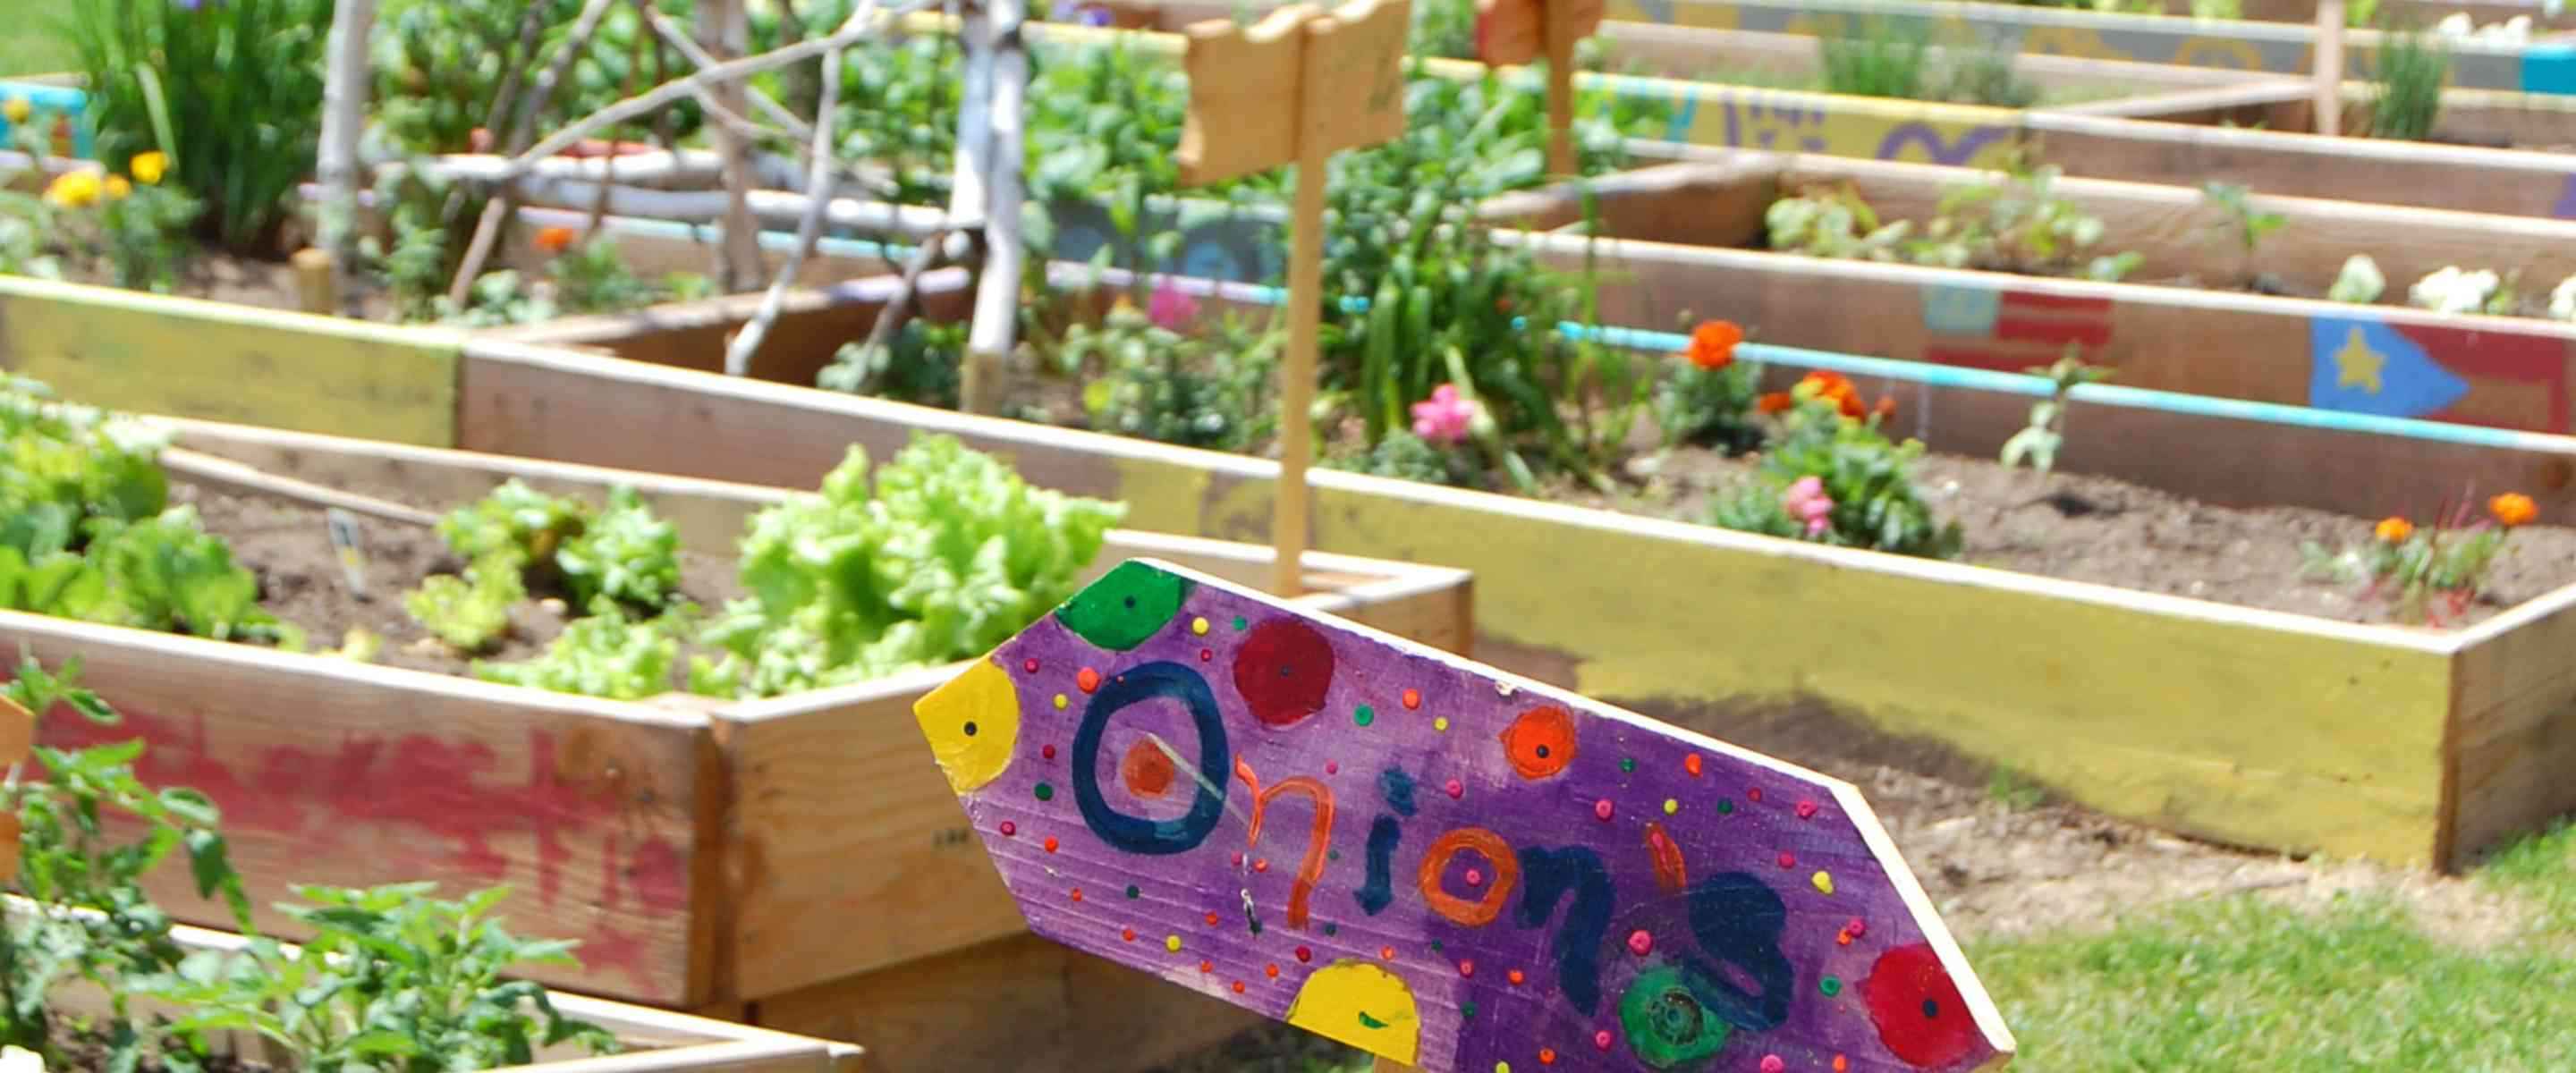 kids-garden-sign